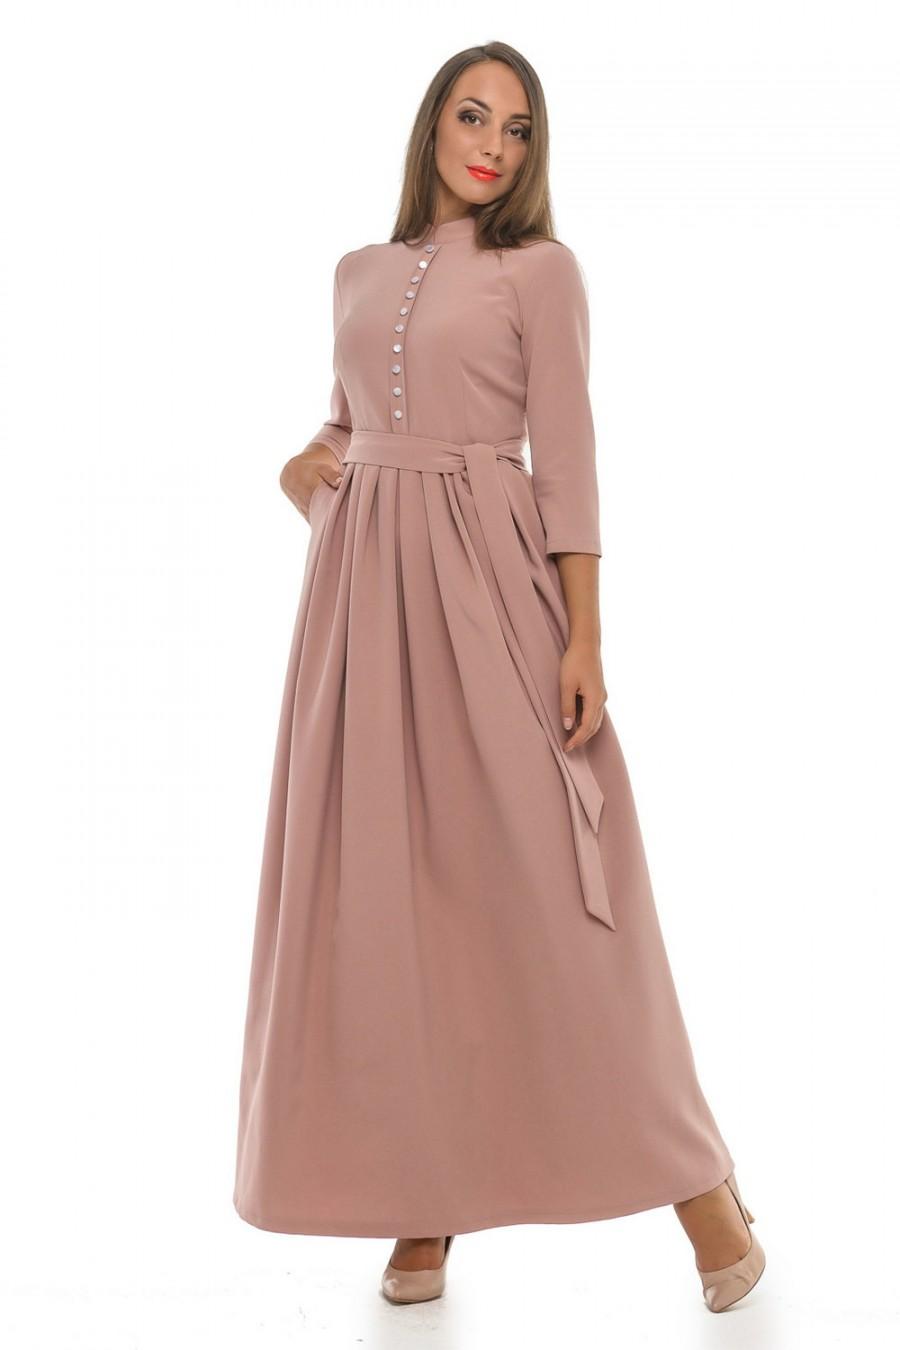 زفاف - Very soft Beige dress, Long dress with pleats, Formal Maxi dress, Mother of the bride dress, long sleeve maxi dress.